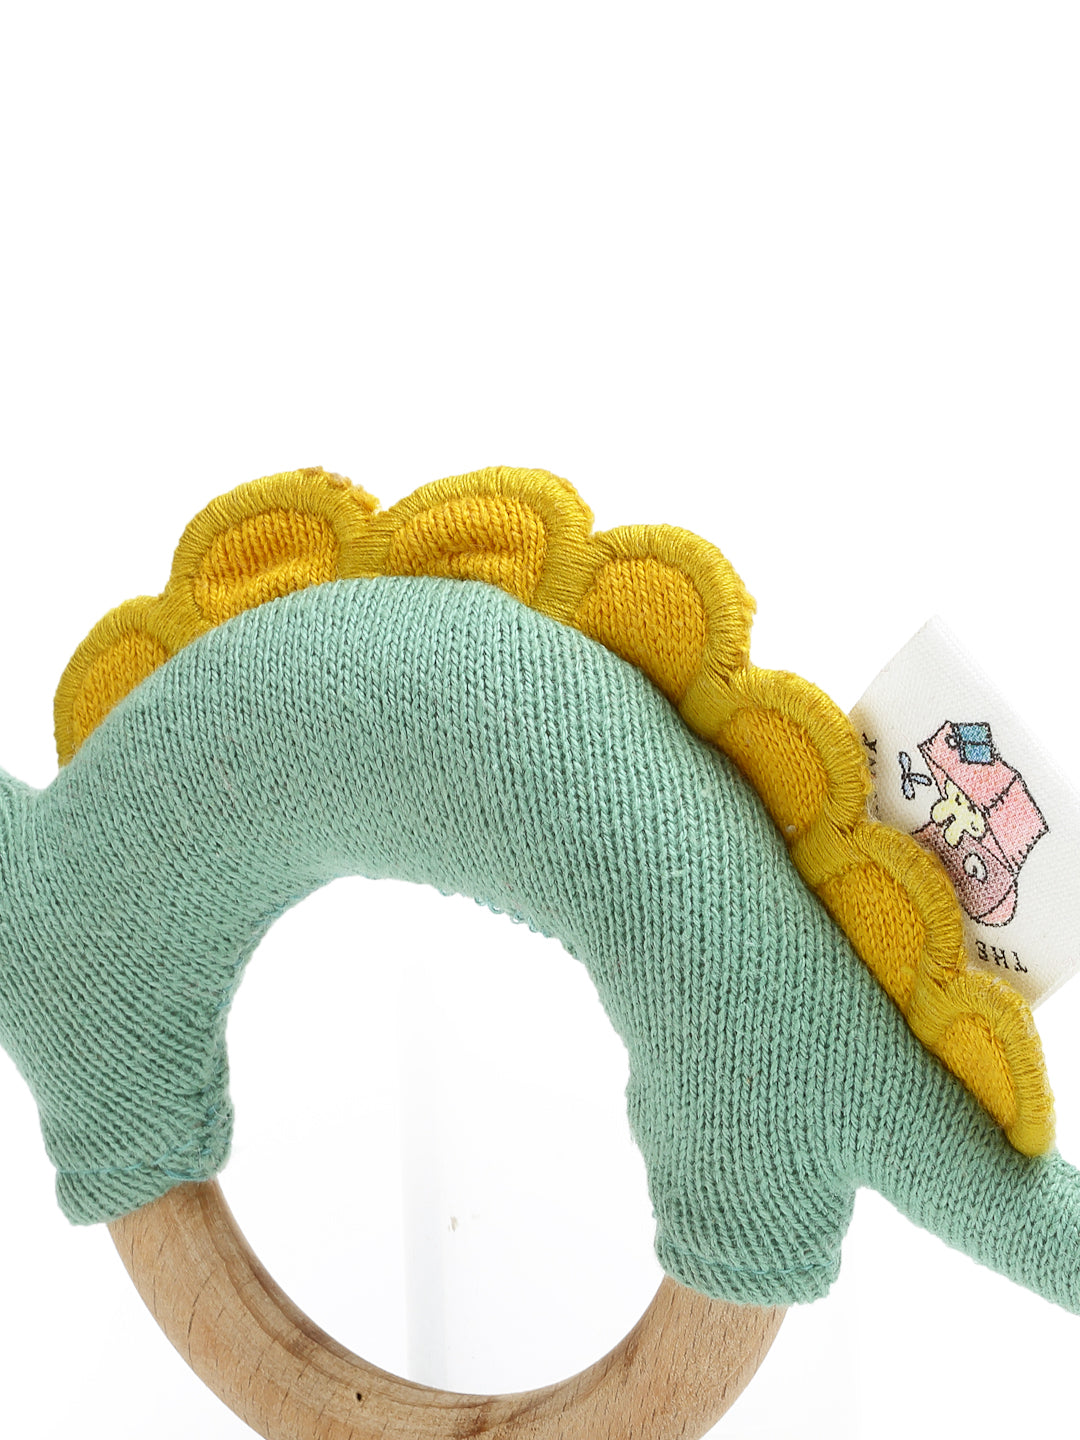 Dinosaur Rattle, Soft Toy for Newborn baby